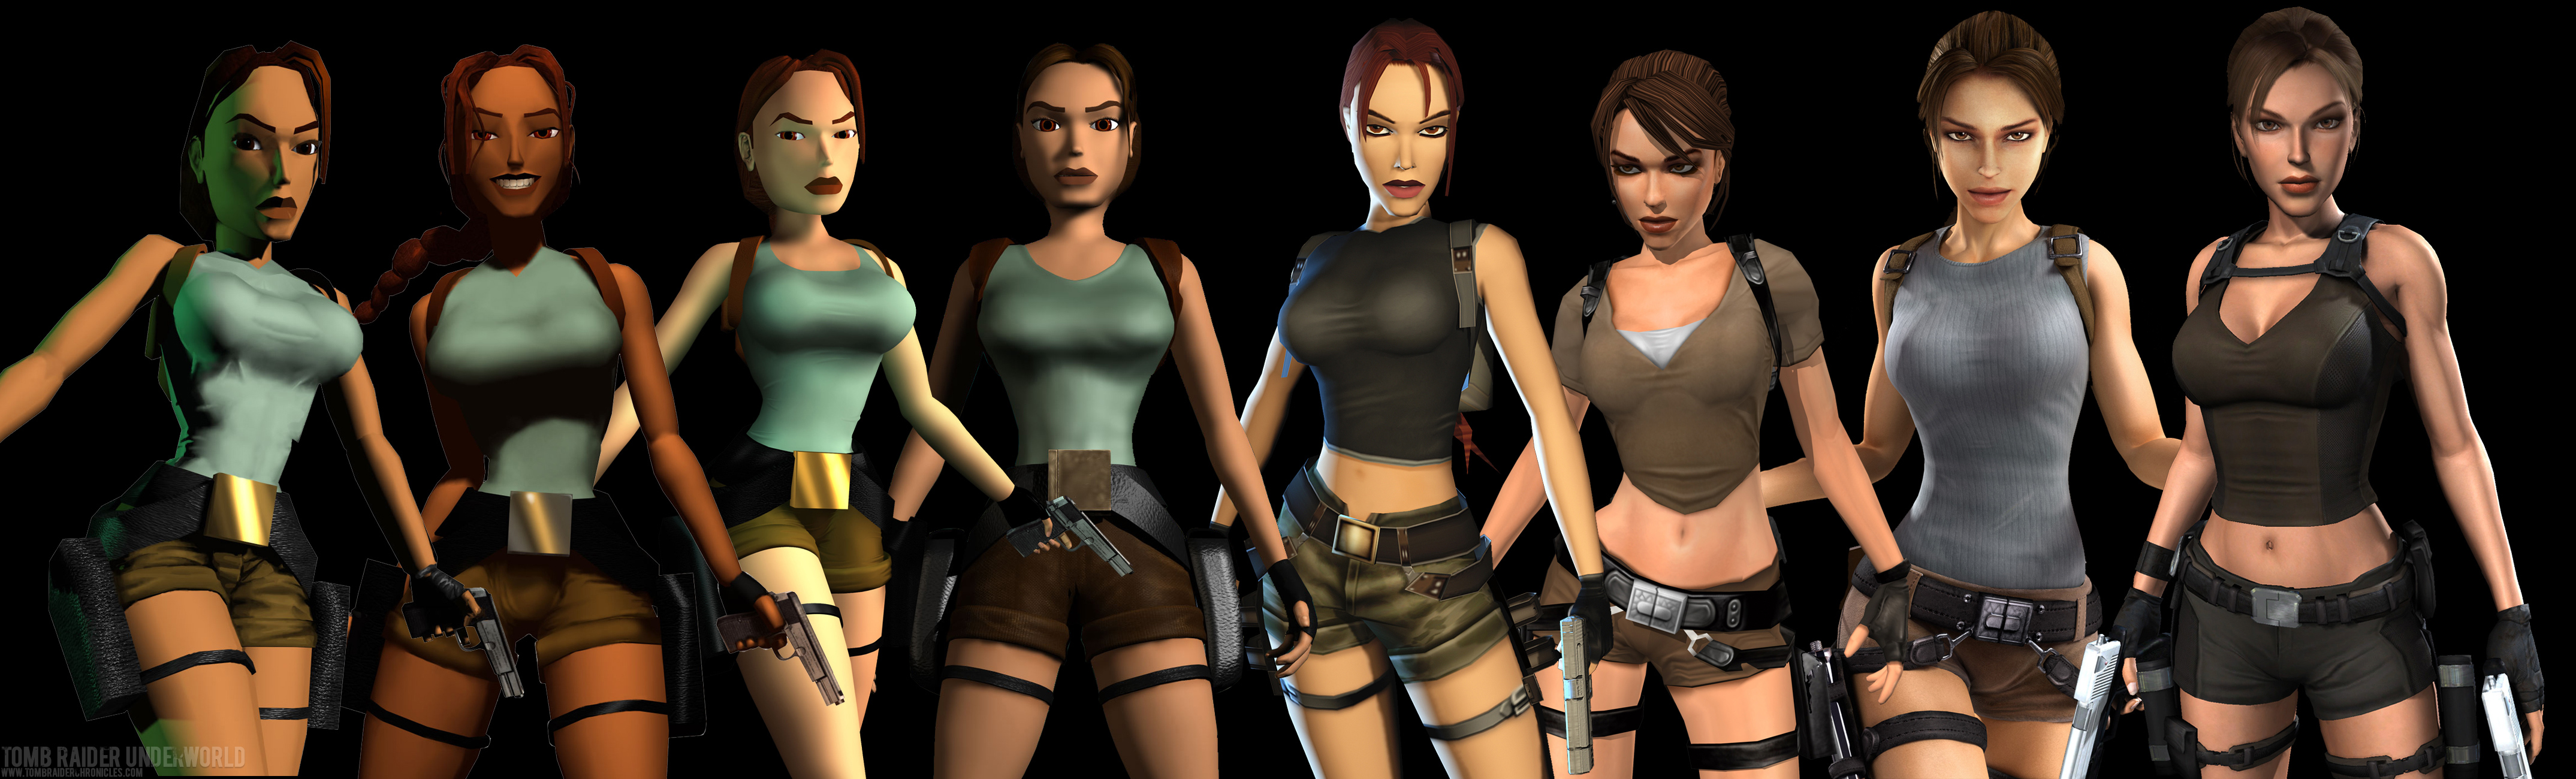 Tomb Raider, Лара Крофт, эволюция - обои на рабочий стол